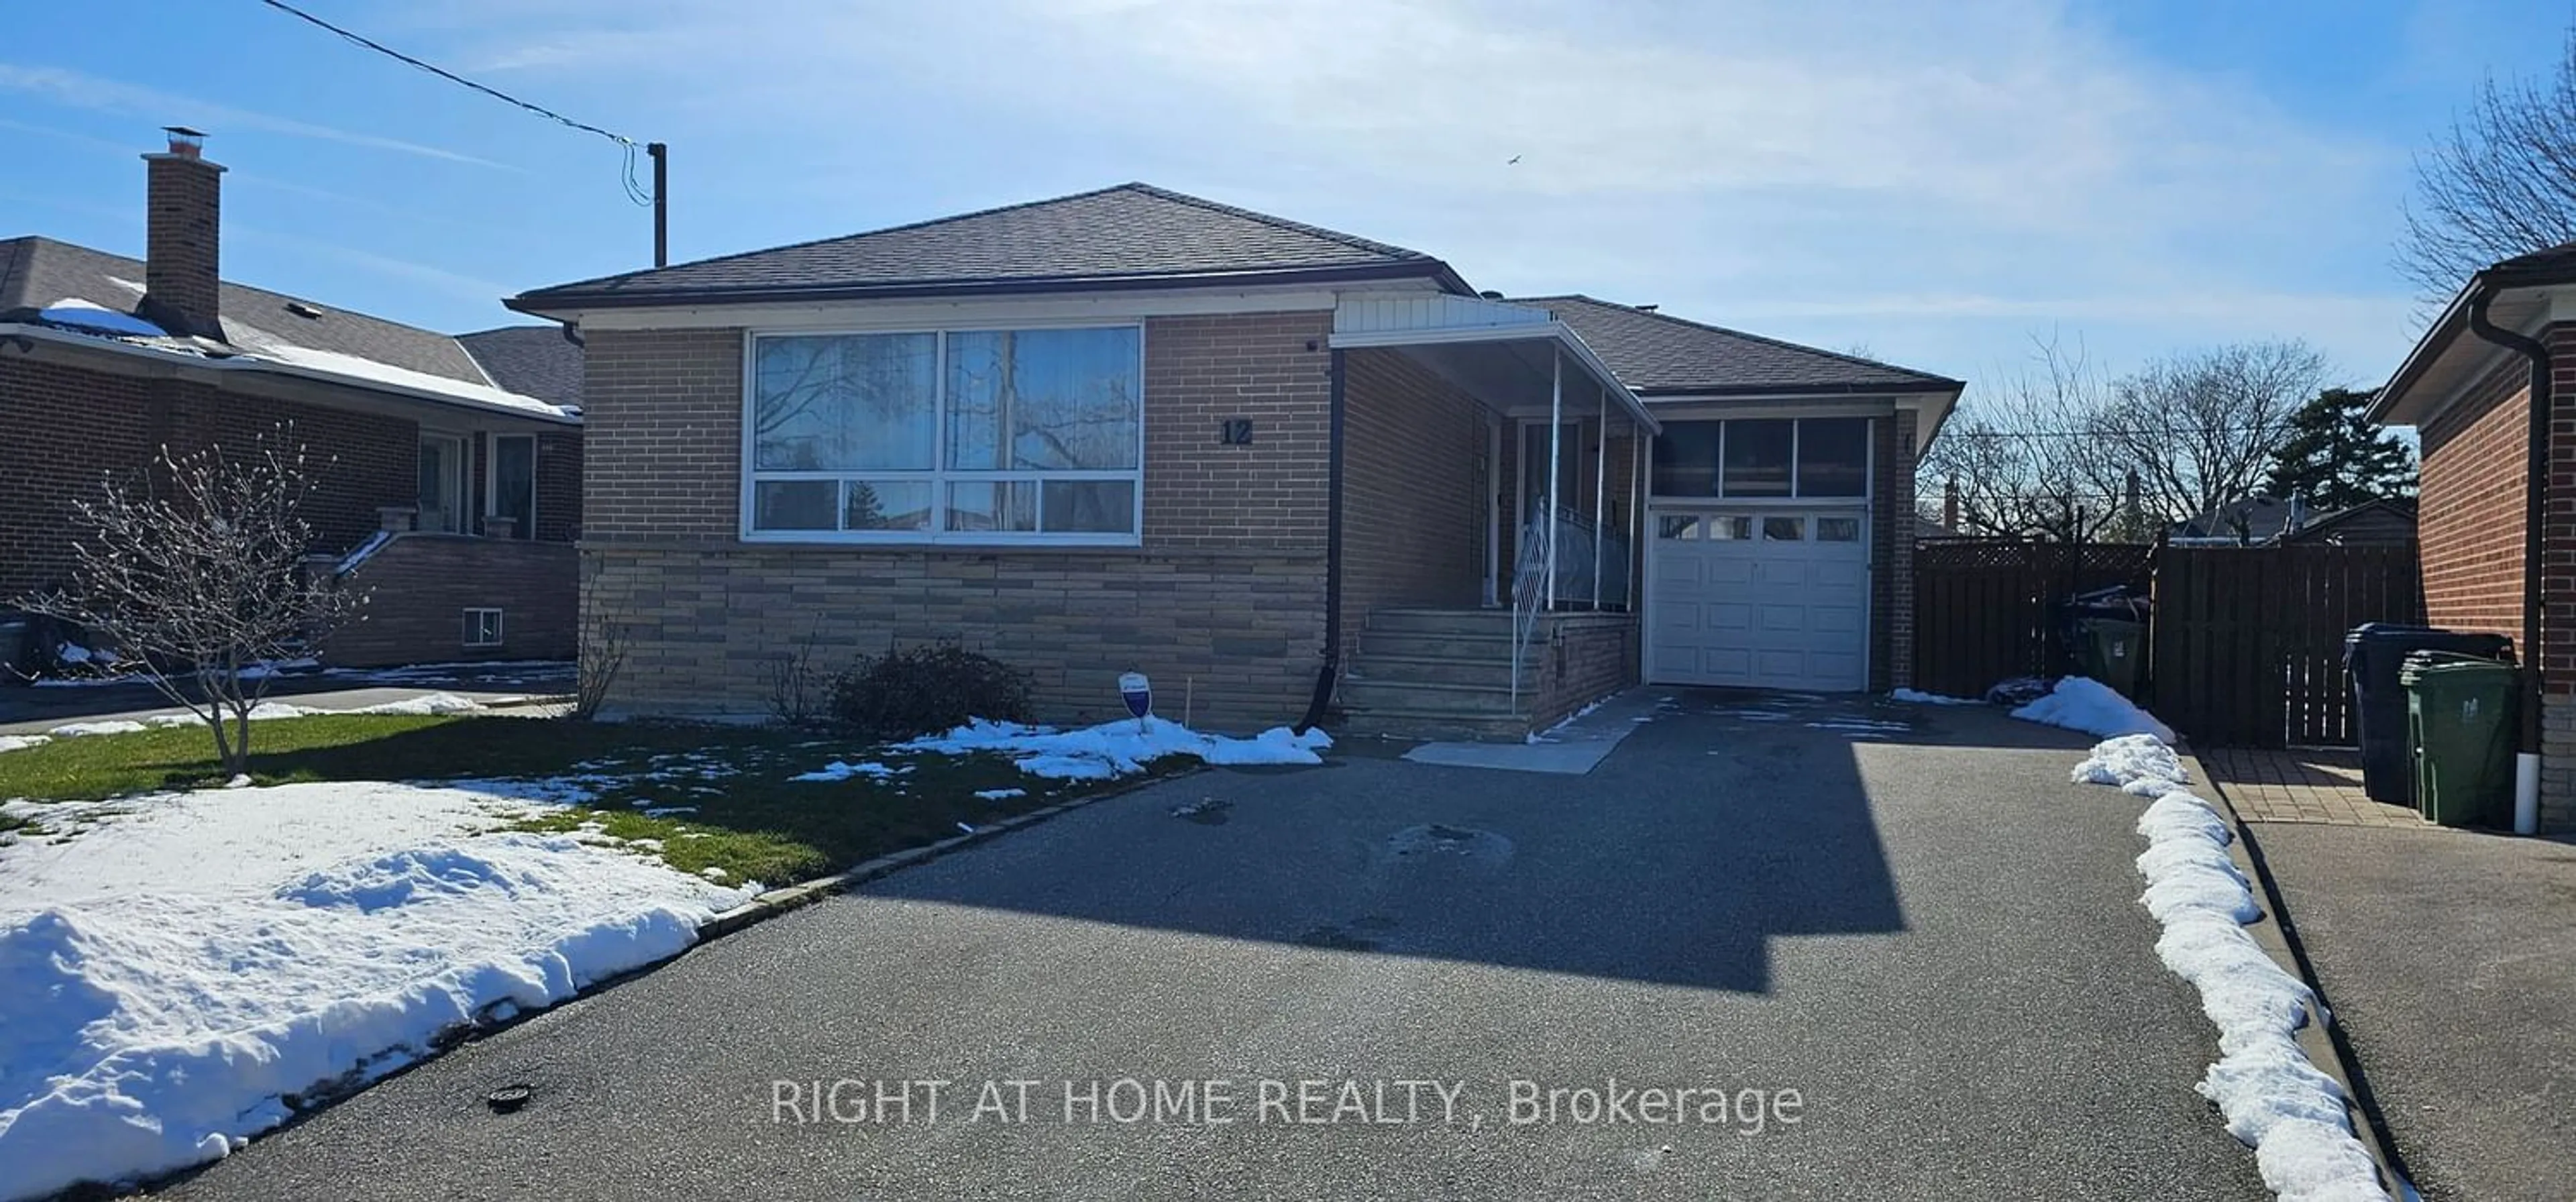 Home with brick exterior material for 12 Billcar Rd, Toronto Ontario M9W 4P4